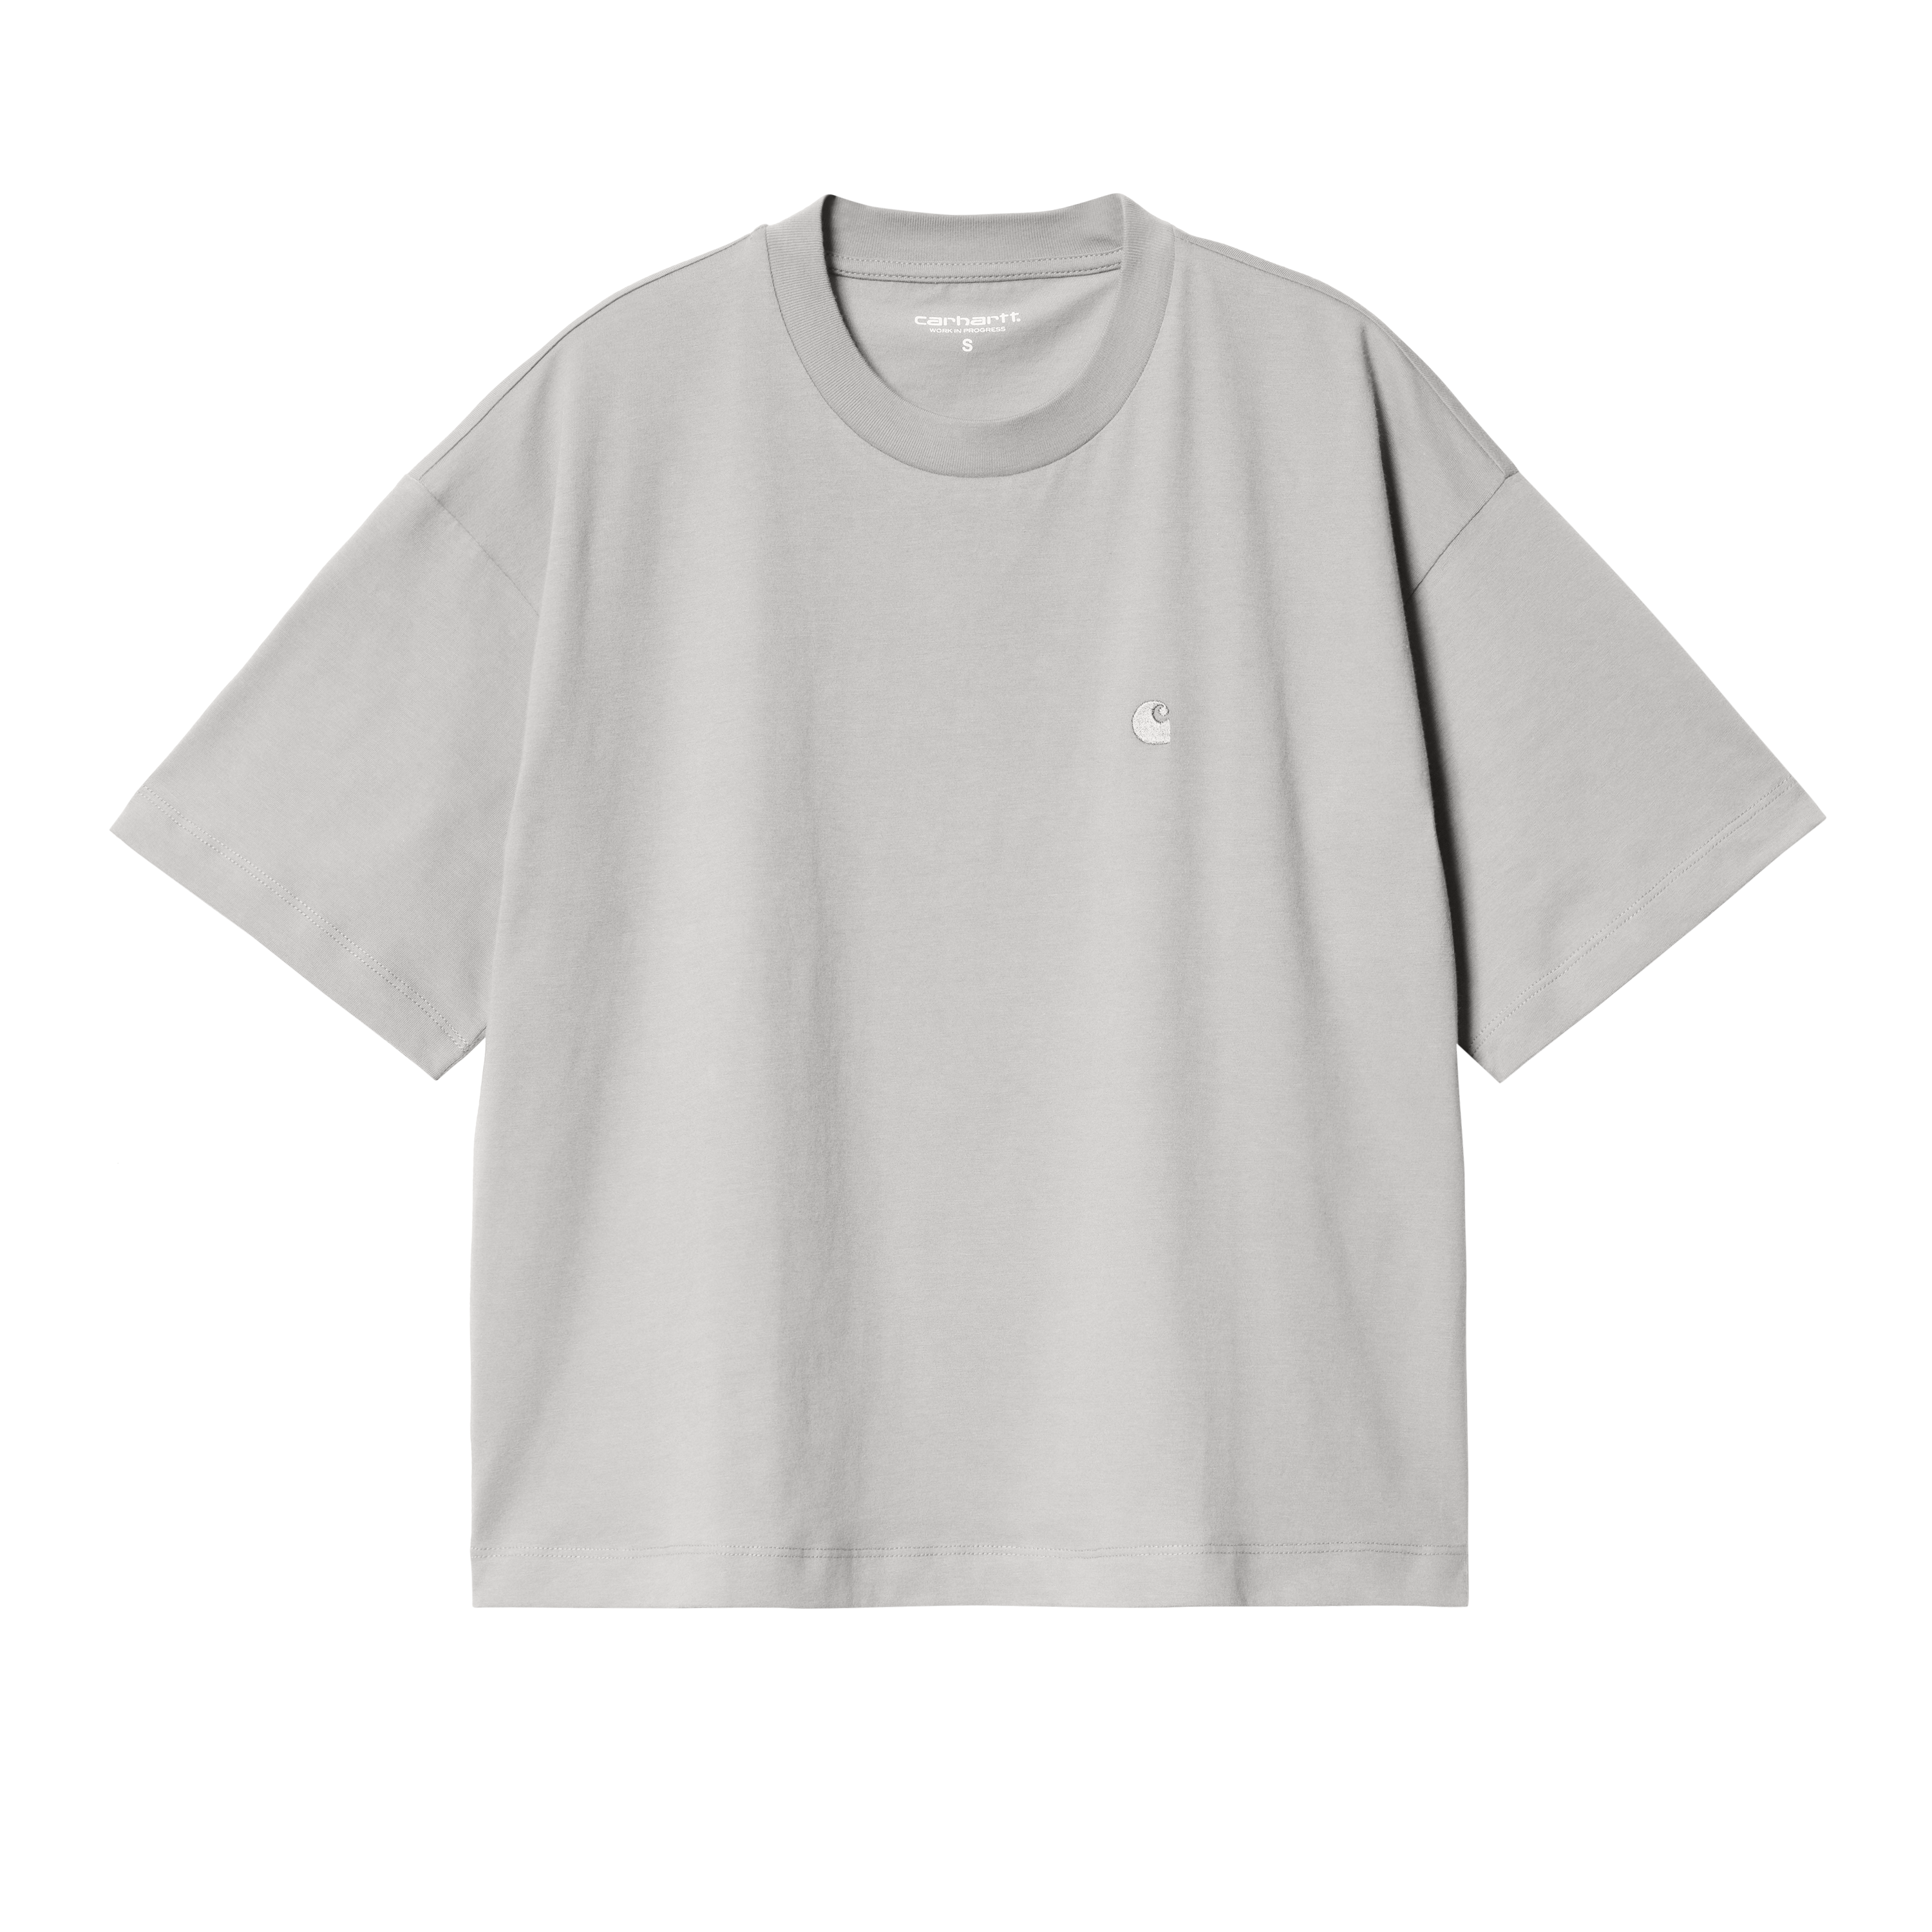 Carhartt WIP Women’s Short Sleeve Chester T-Shirt in Grau